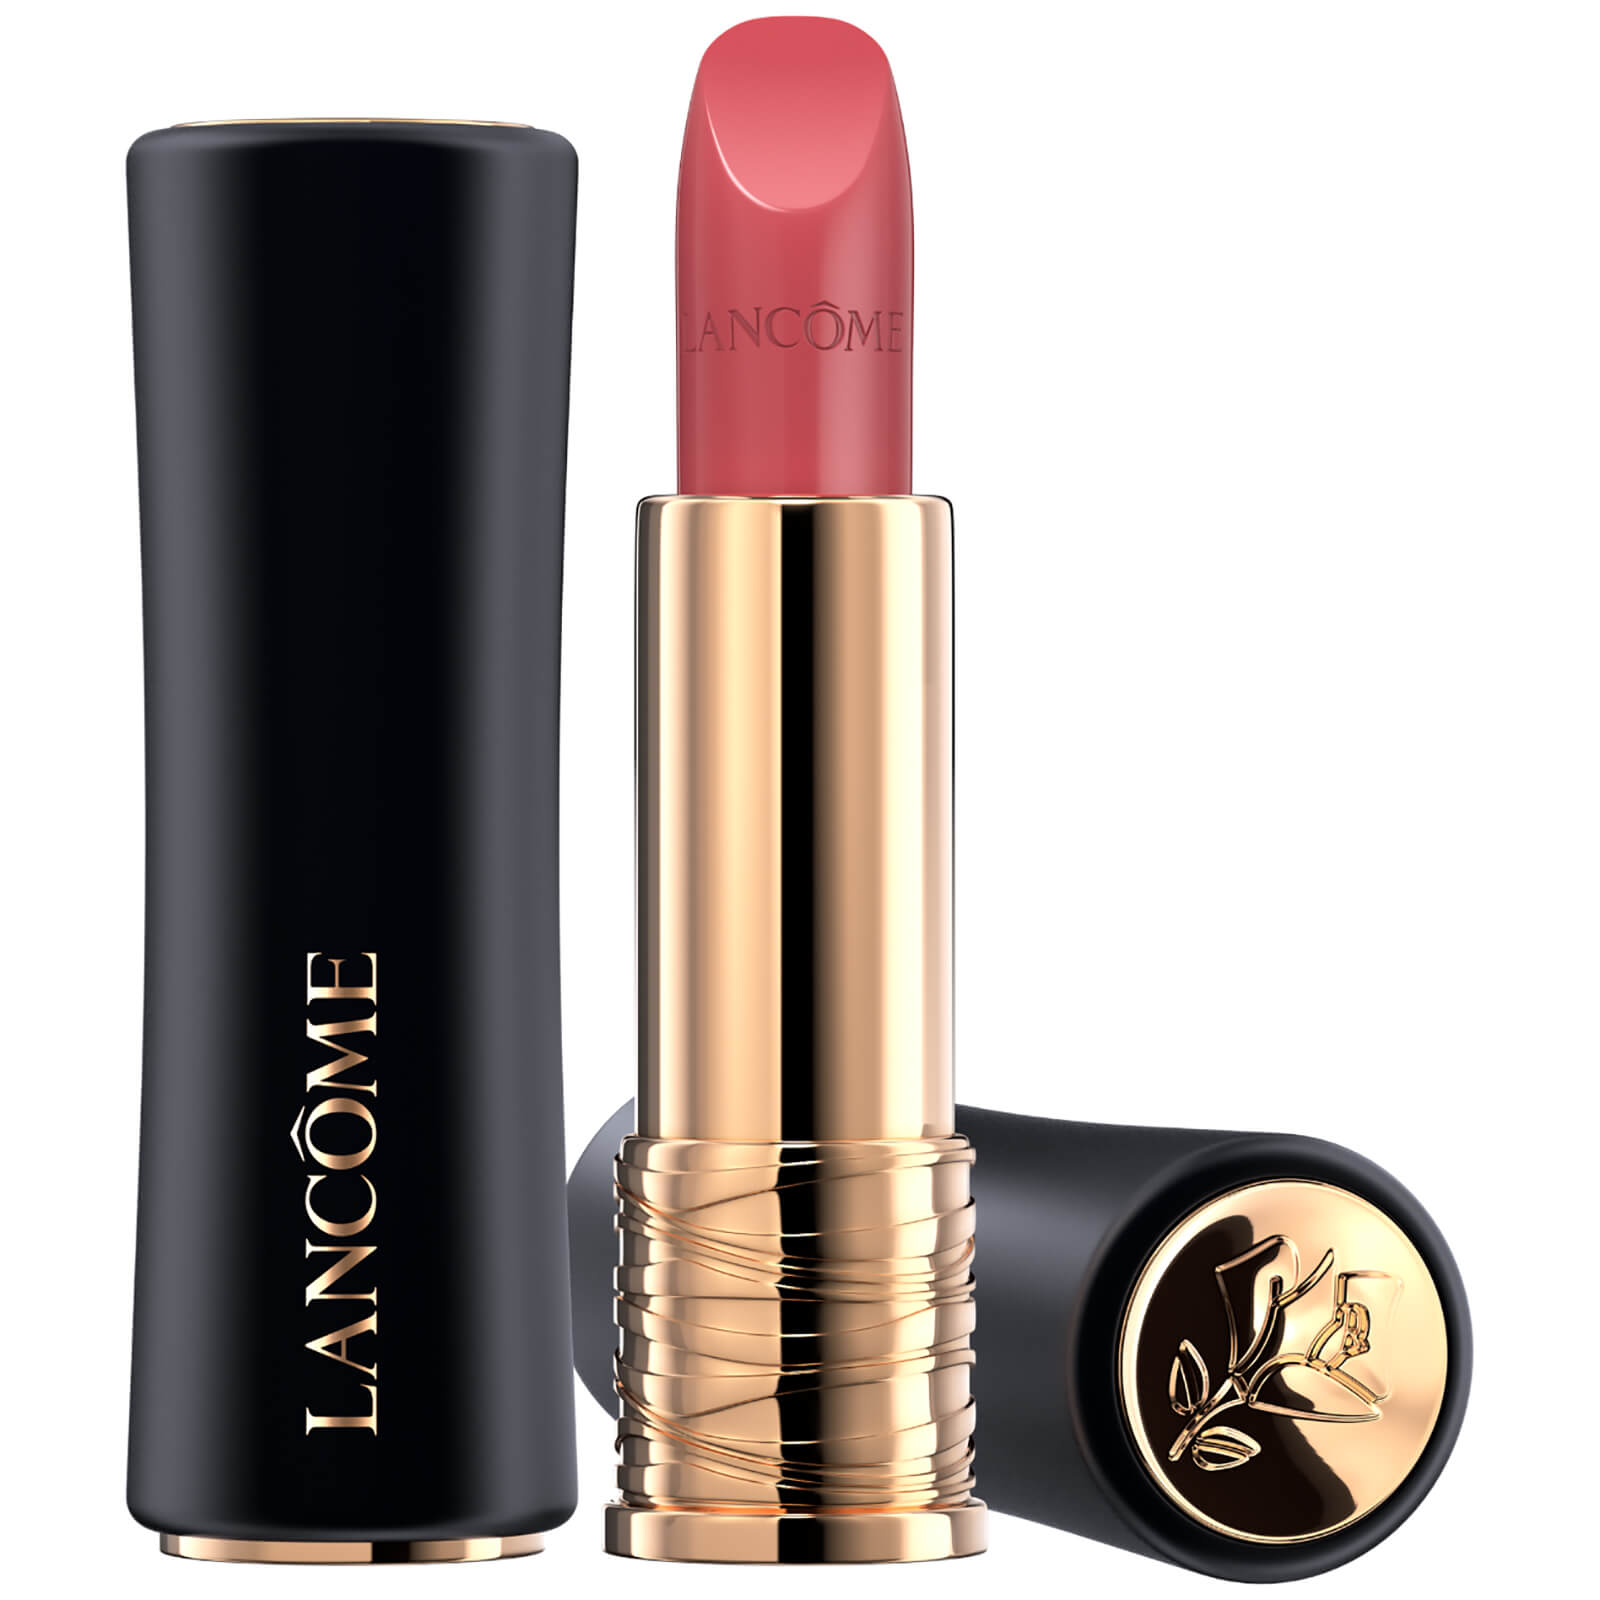 Lancôme L'Absolu Rouge Cream Lipstick 35ml (Verschiedene Farbtöne) - 06 Rose Nu